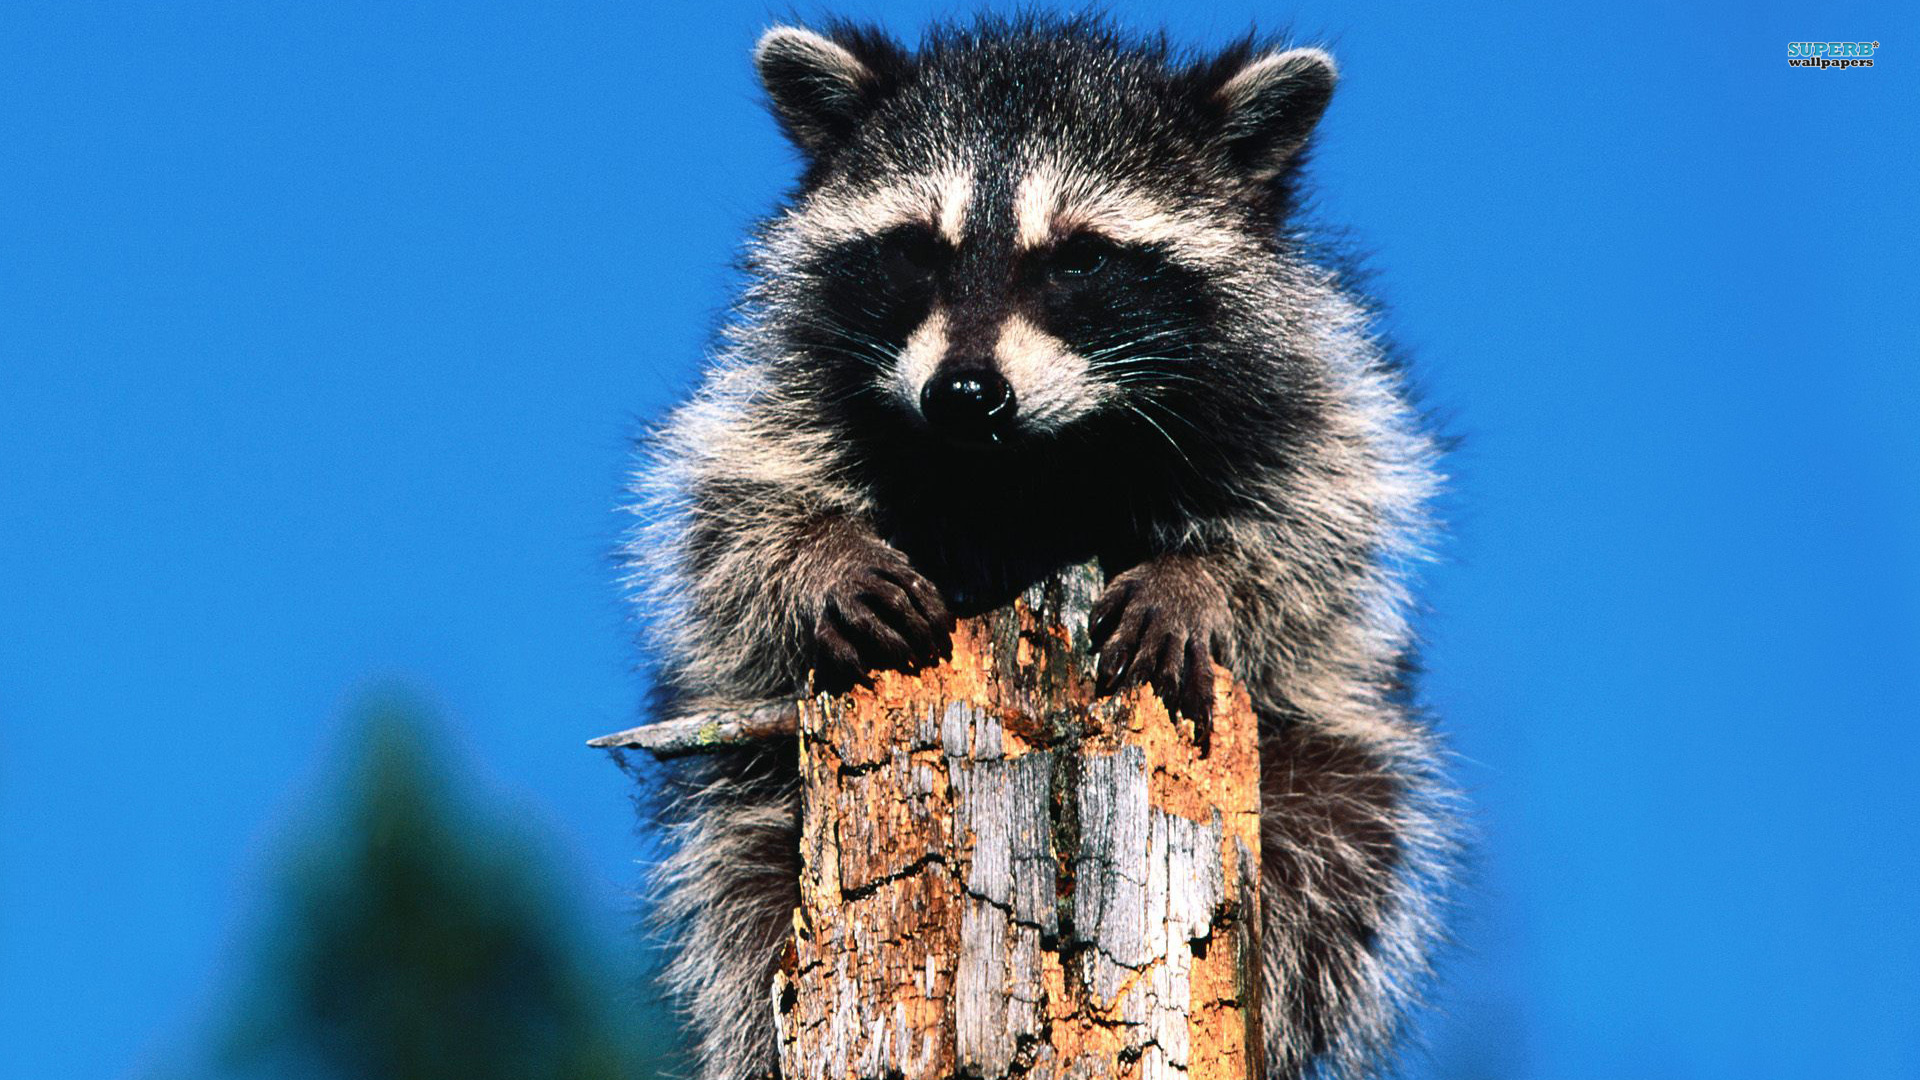 Adorable raccoon in its natural habitat.